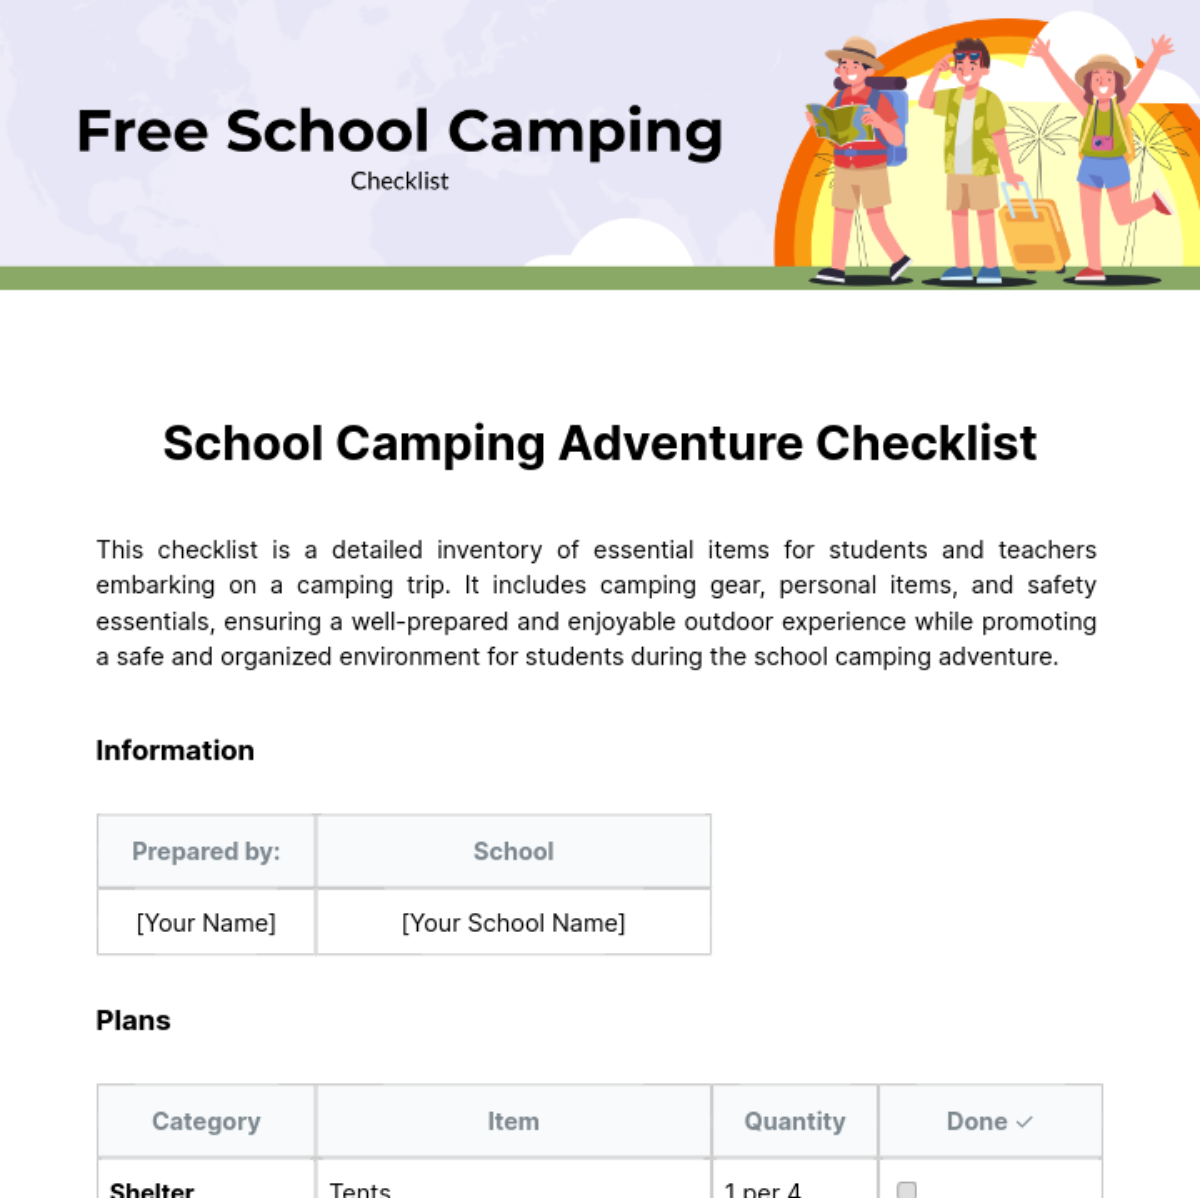 Free School Camping Checklist Template